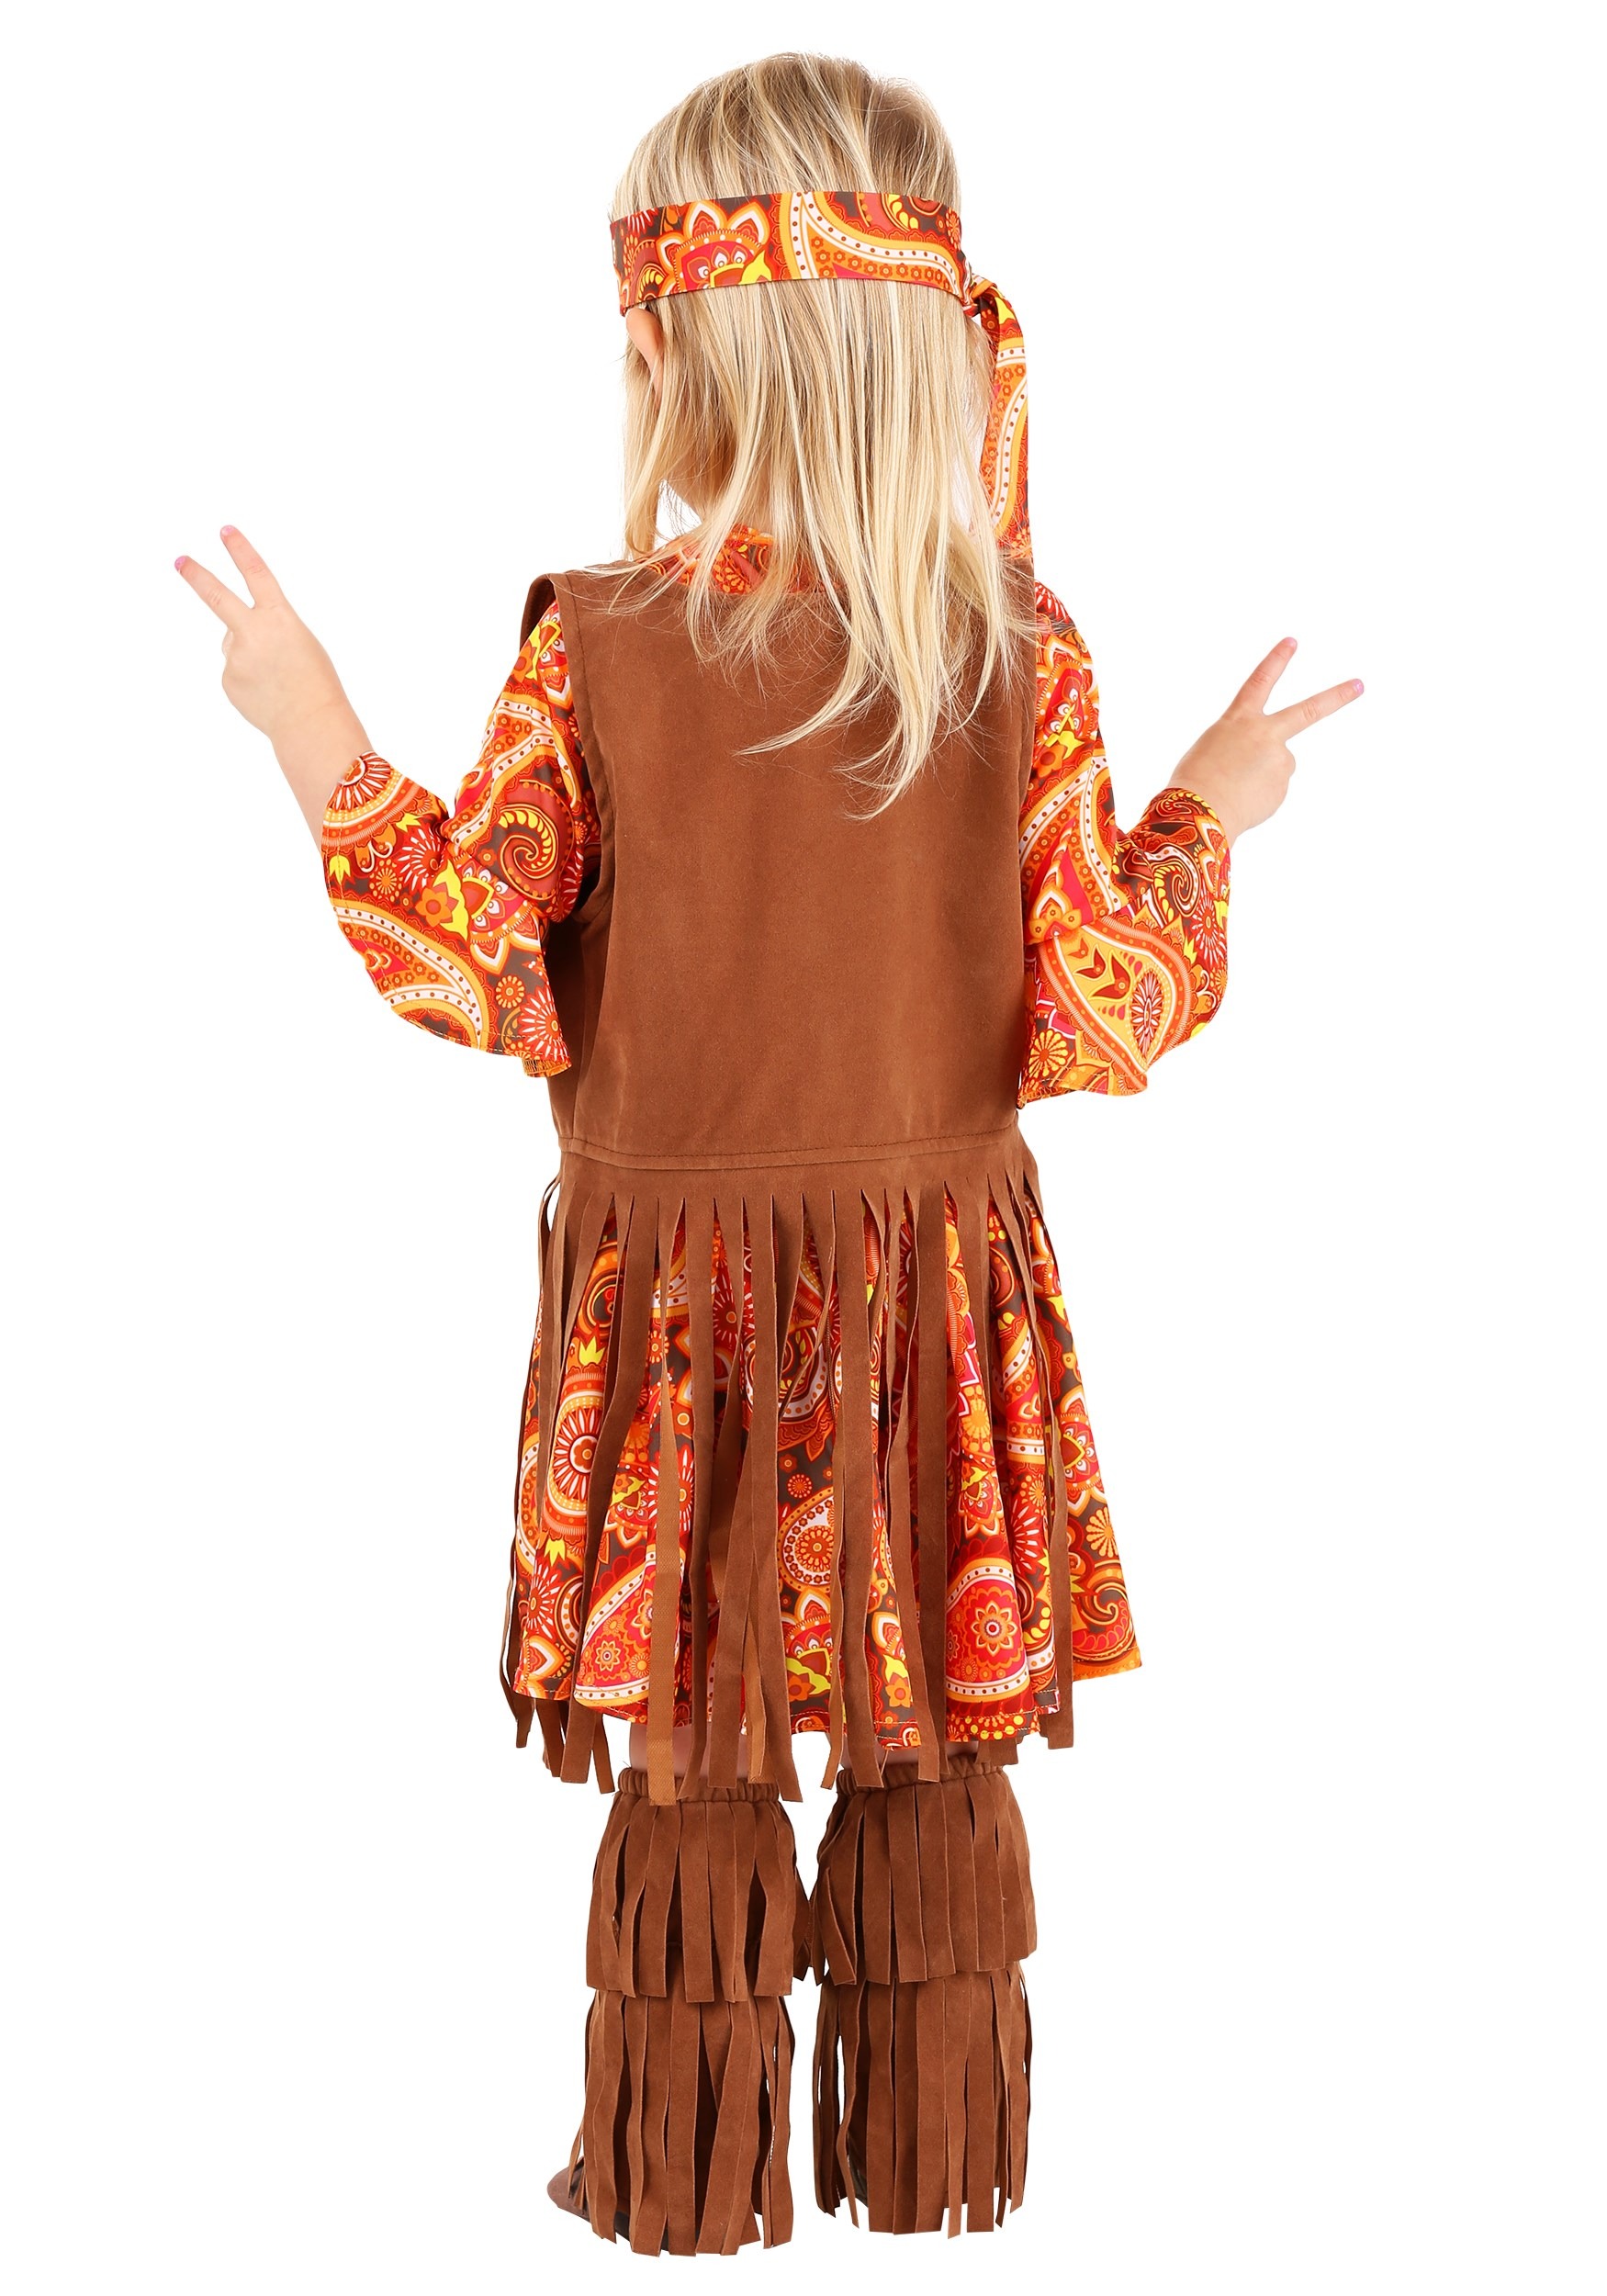 Fringe Toddler Hippie Costume